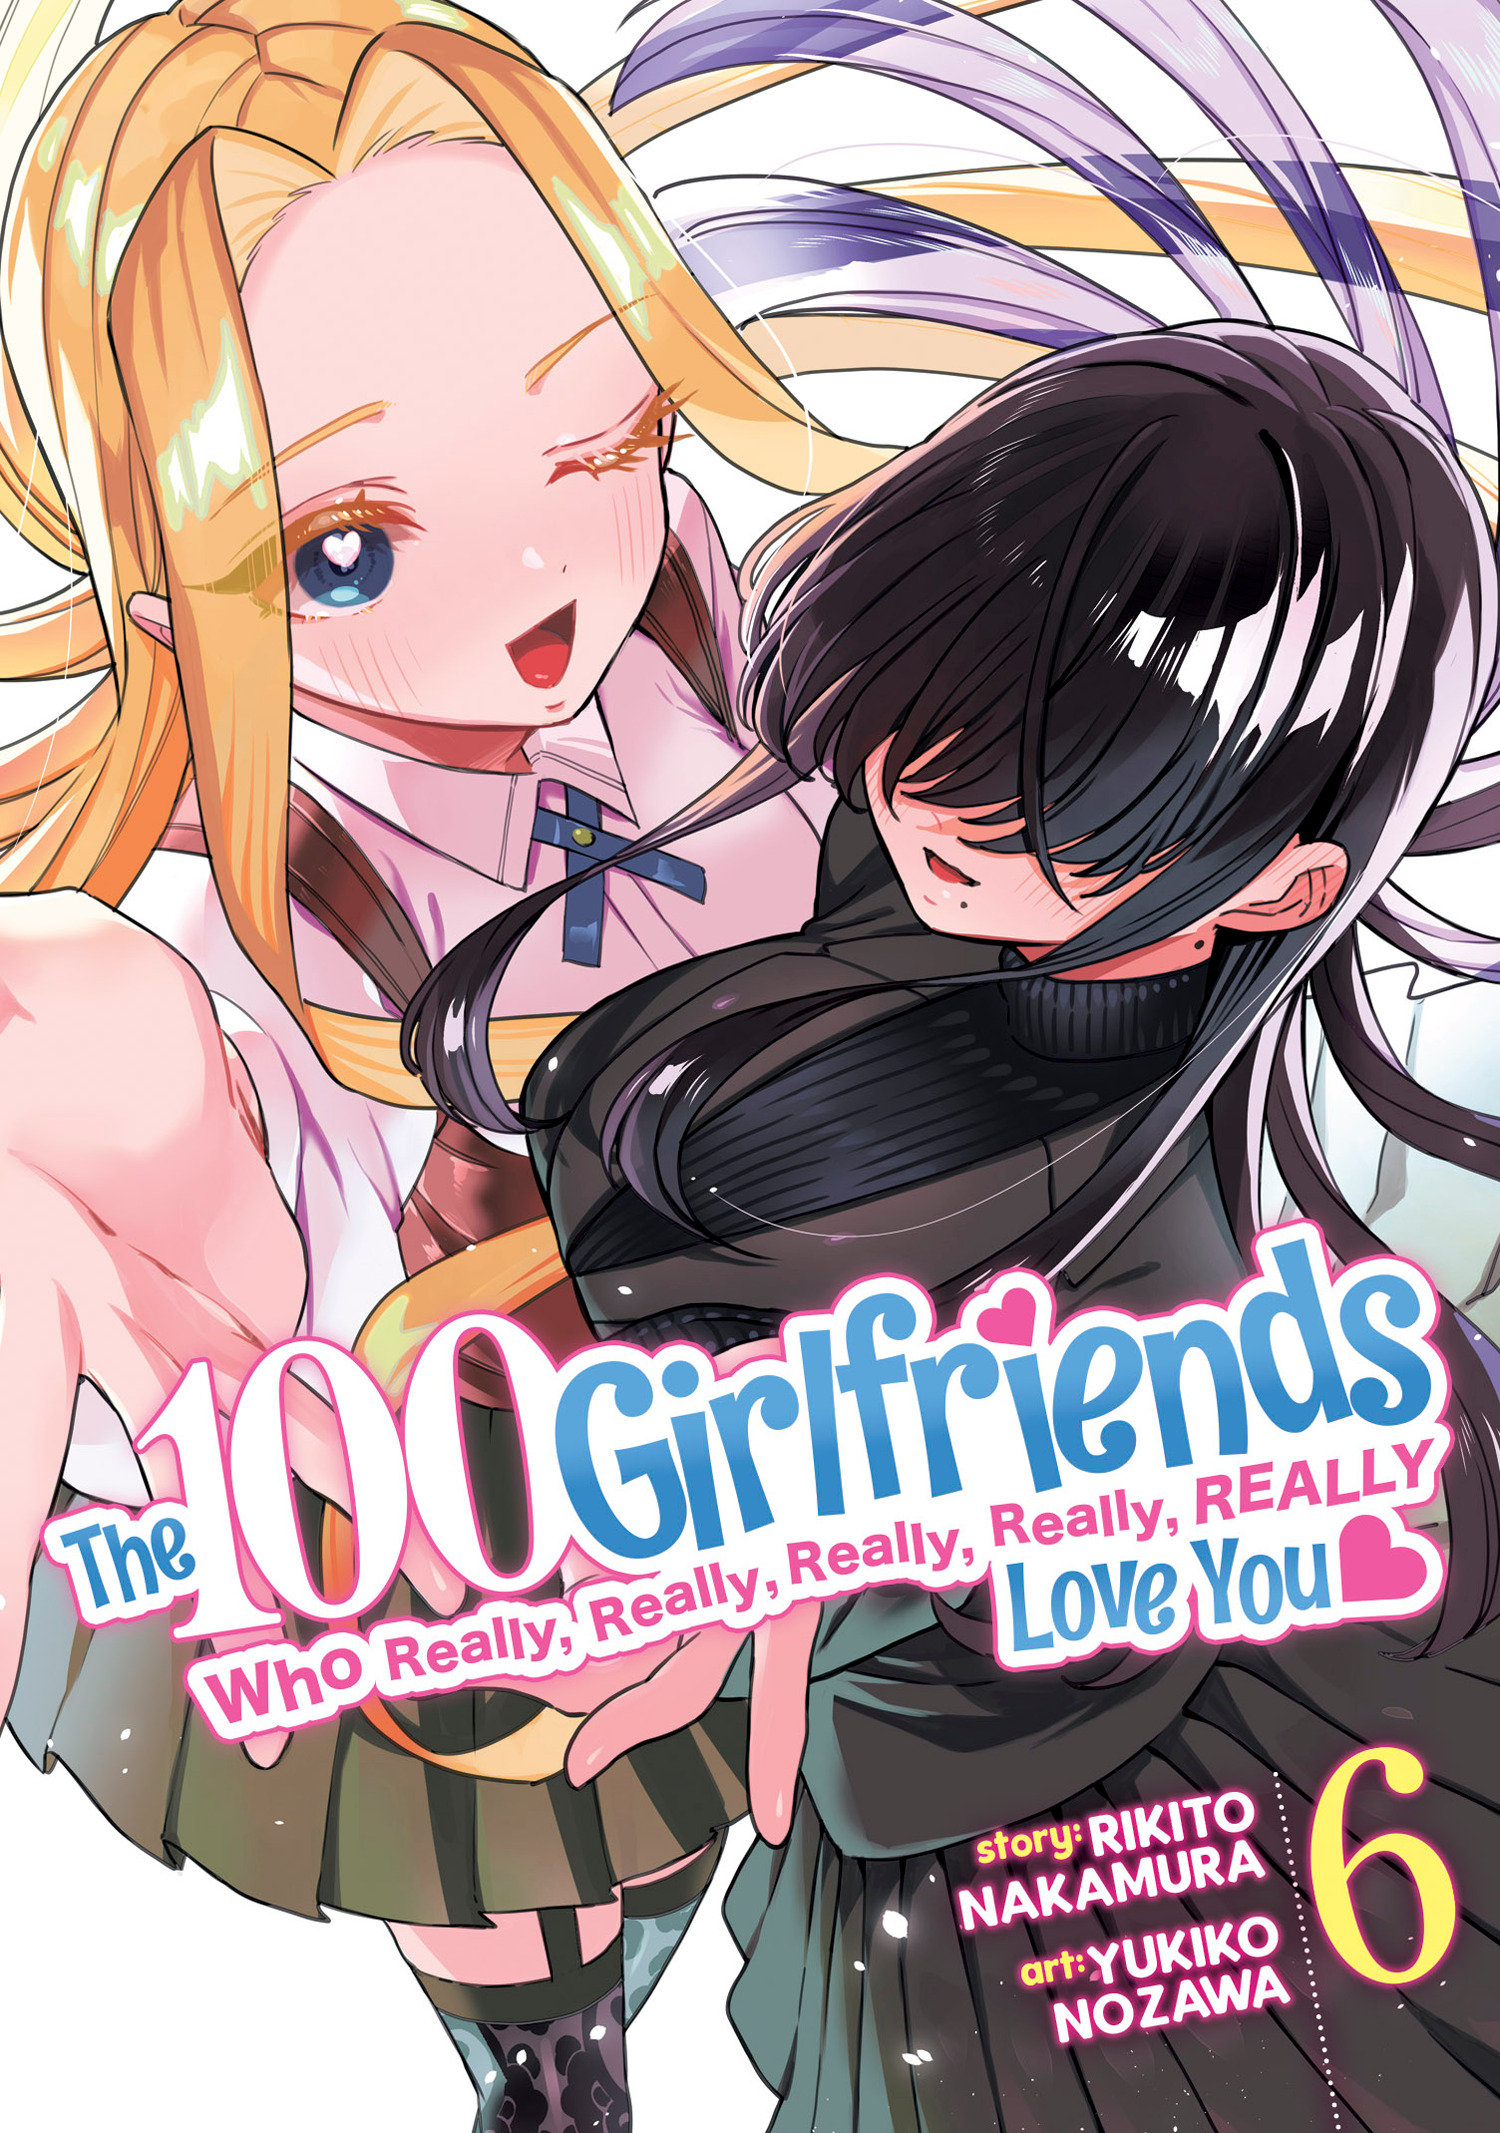 100 Girlfriends Who Really, Really, Really, Really, Really Love You Manga Volume 6